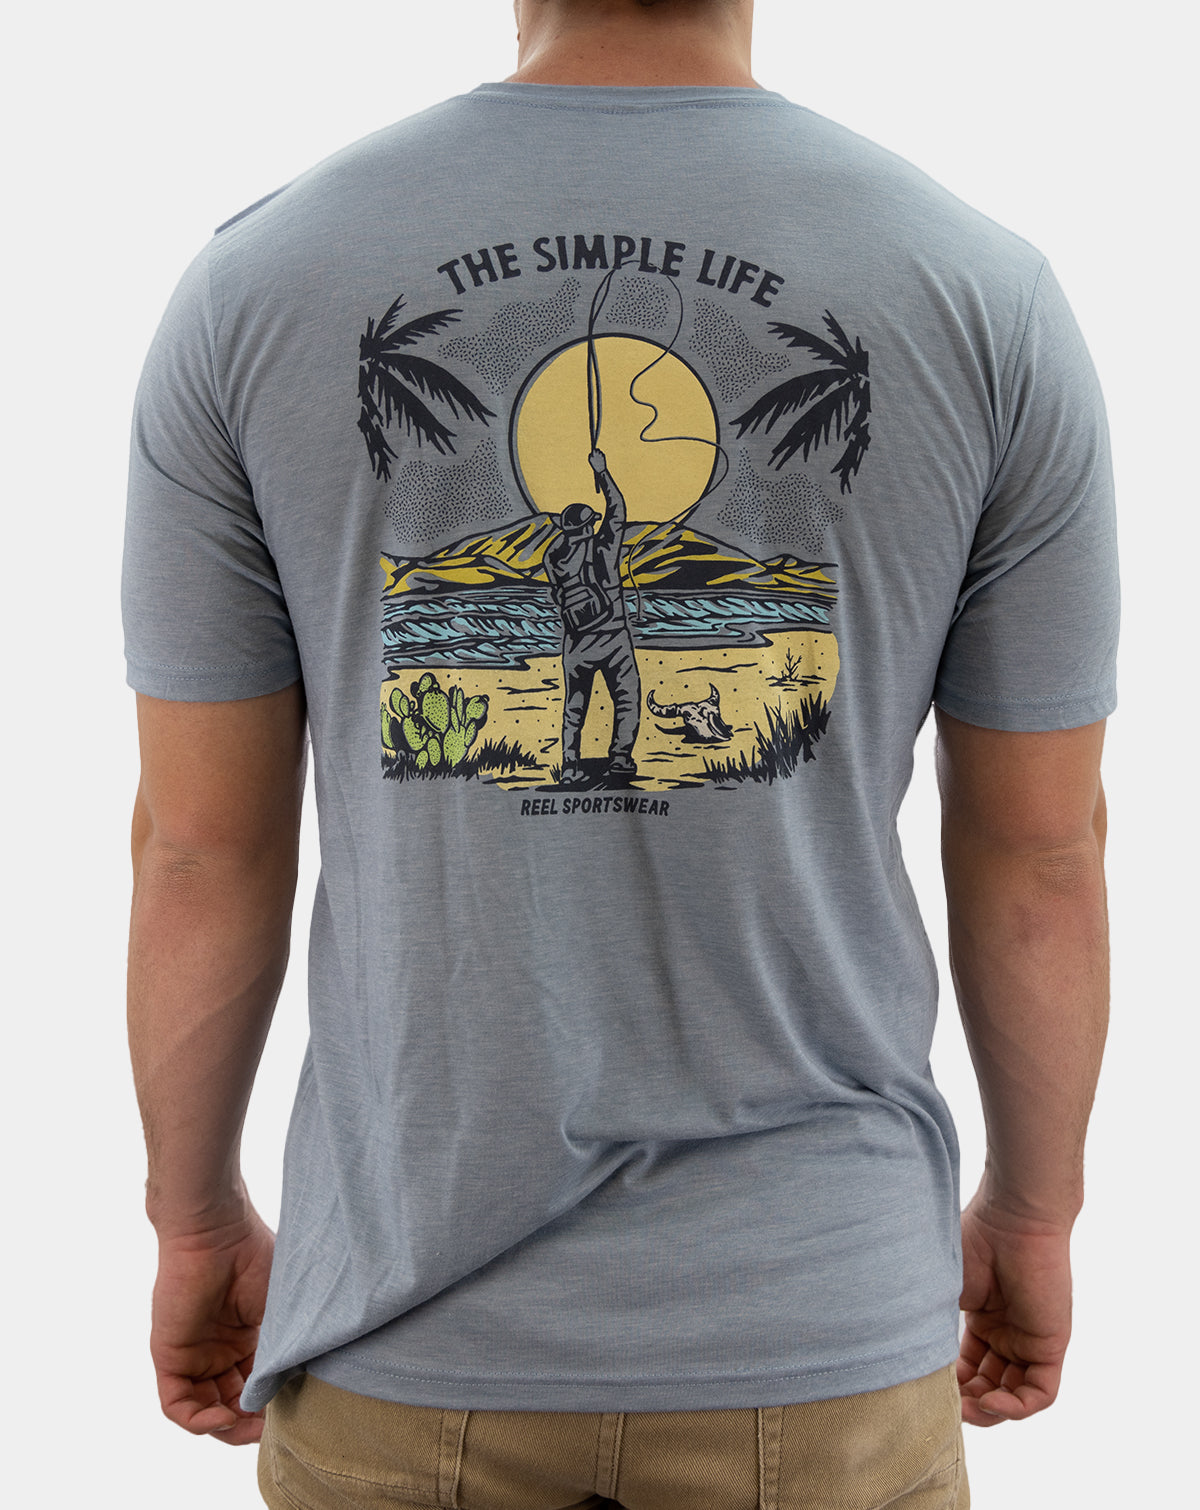 Fishing T Shirts - Men's Fishing Tees & Graphic T Shirts